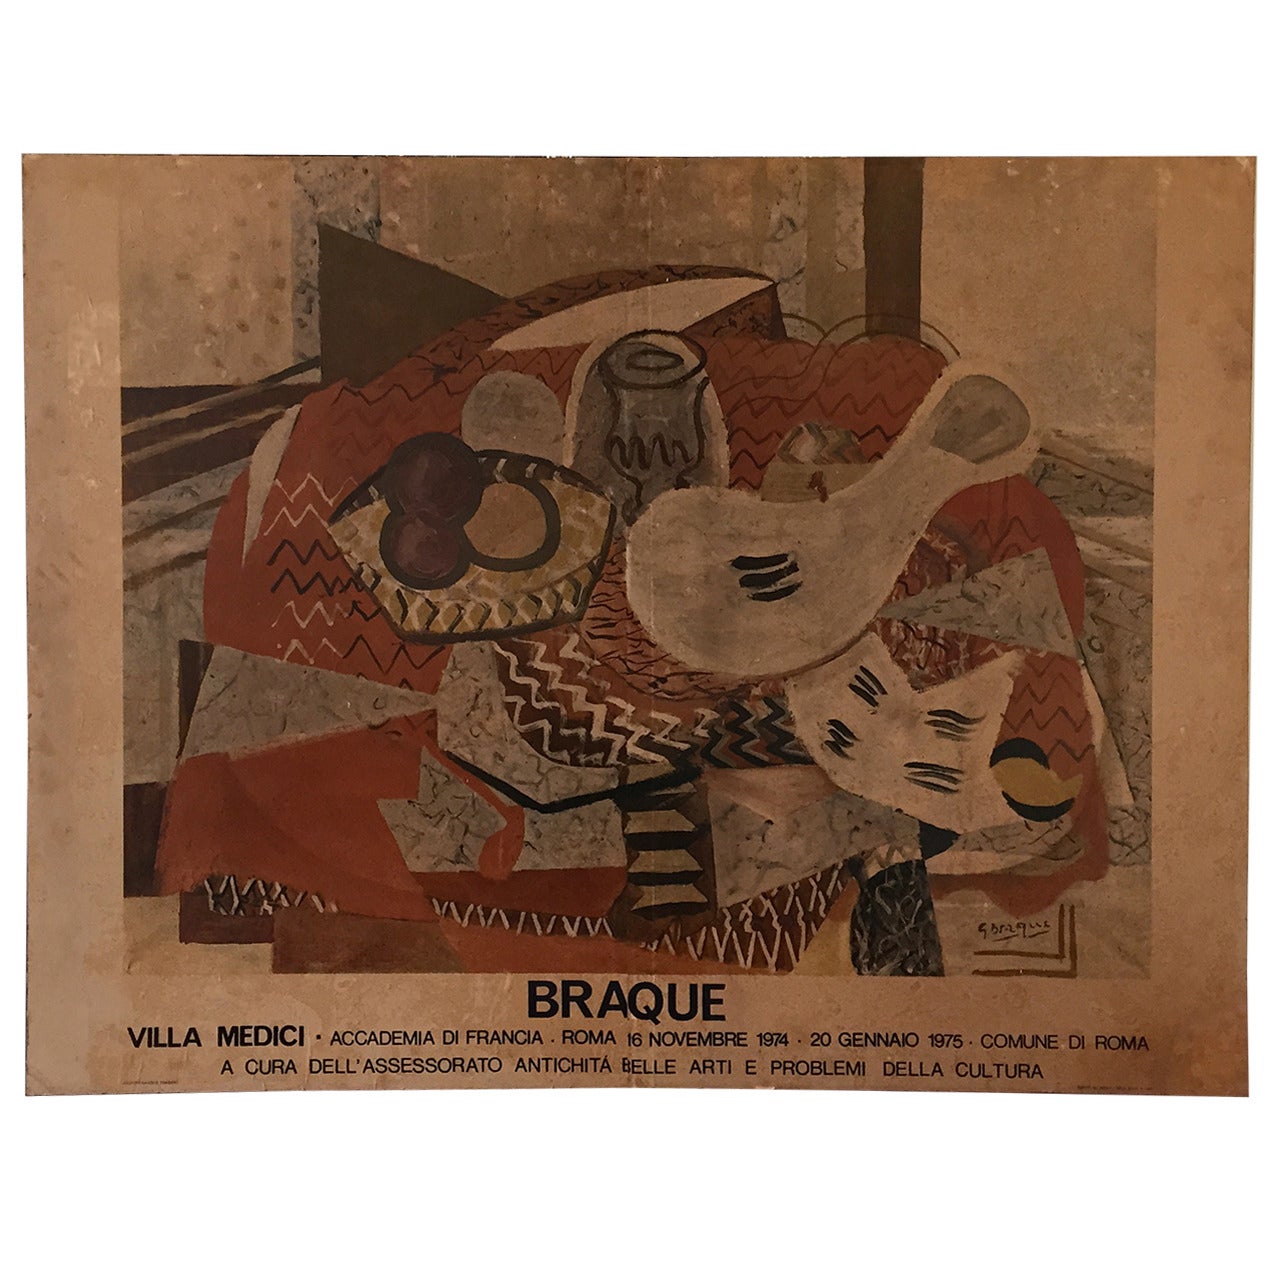 Monumental Vintage Braque Poster 1974-75 Exhibition at Villa Medici in Rome